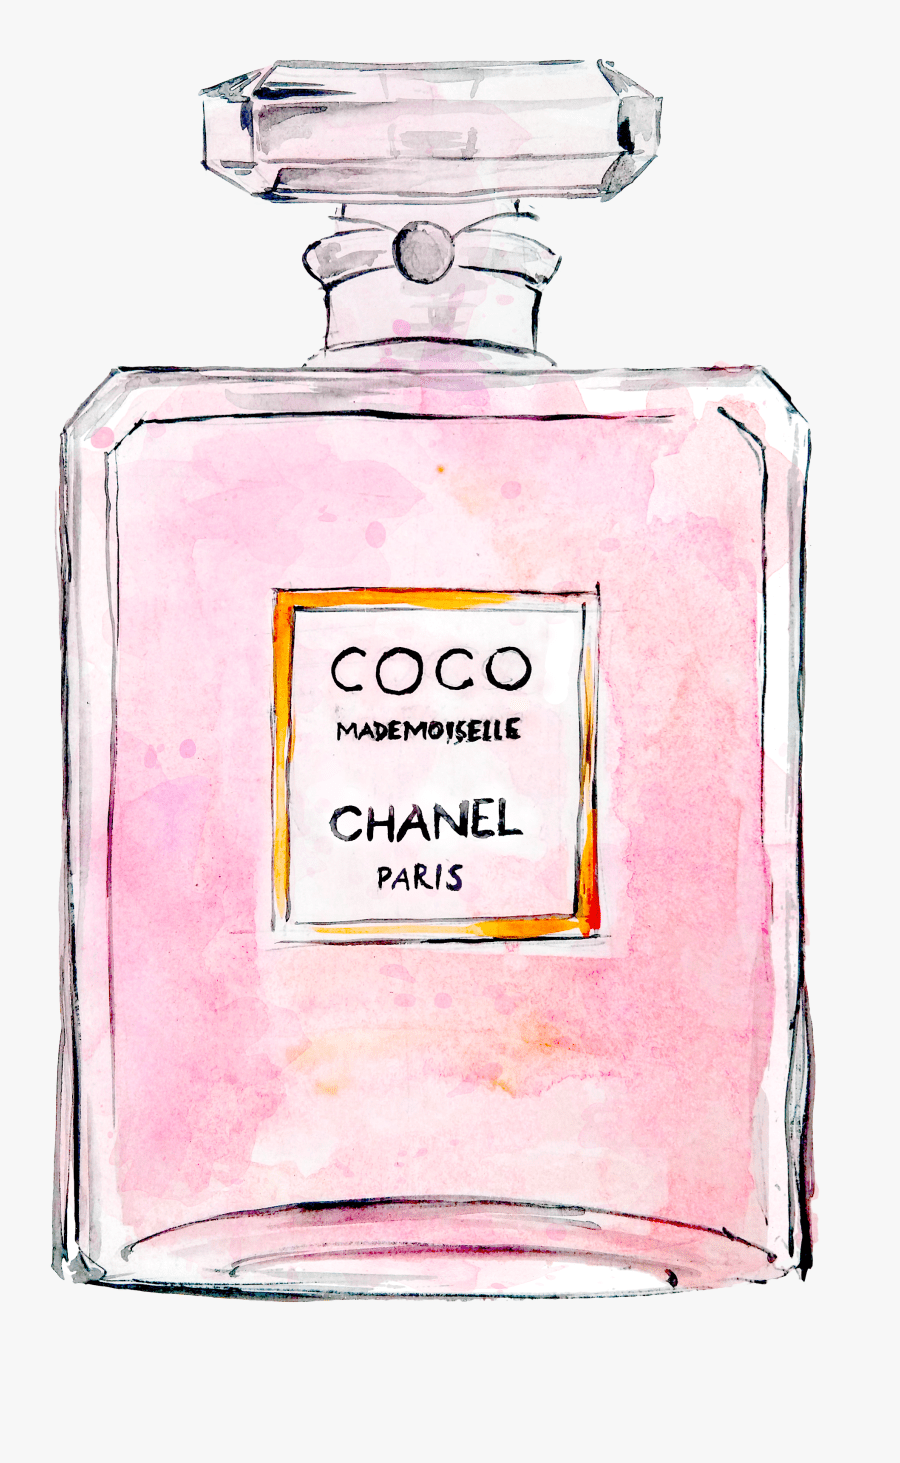 Chanel Perfume Aesthetic Wallpaper : Perfume vintage vintage chanel ...